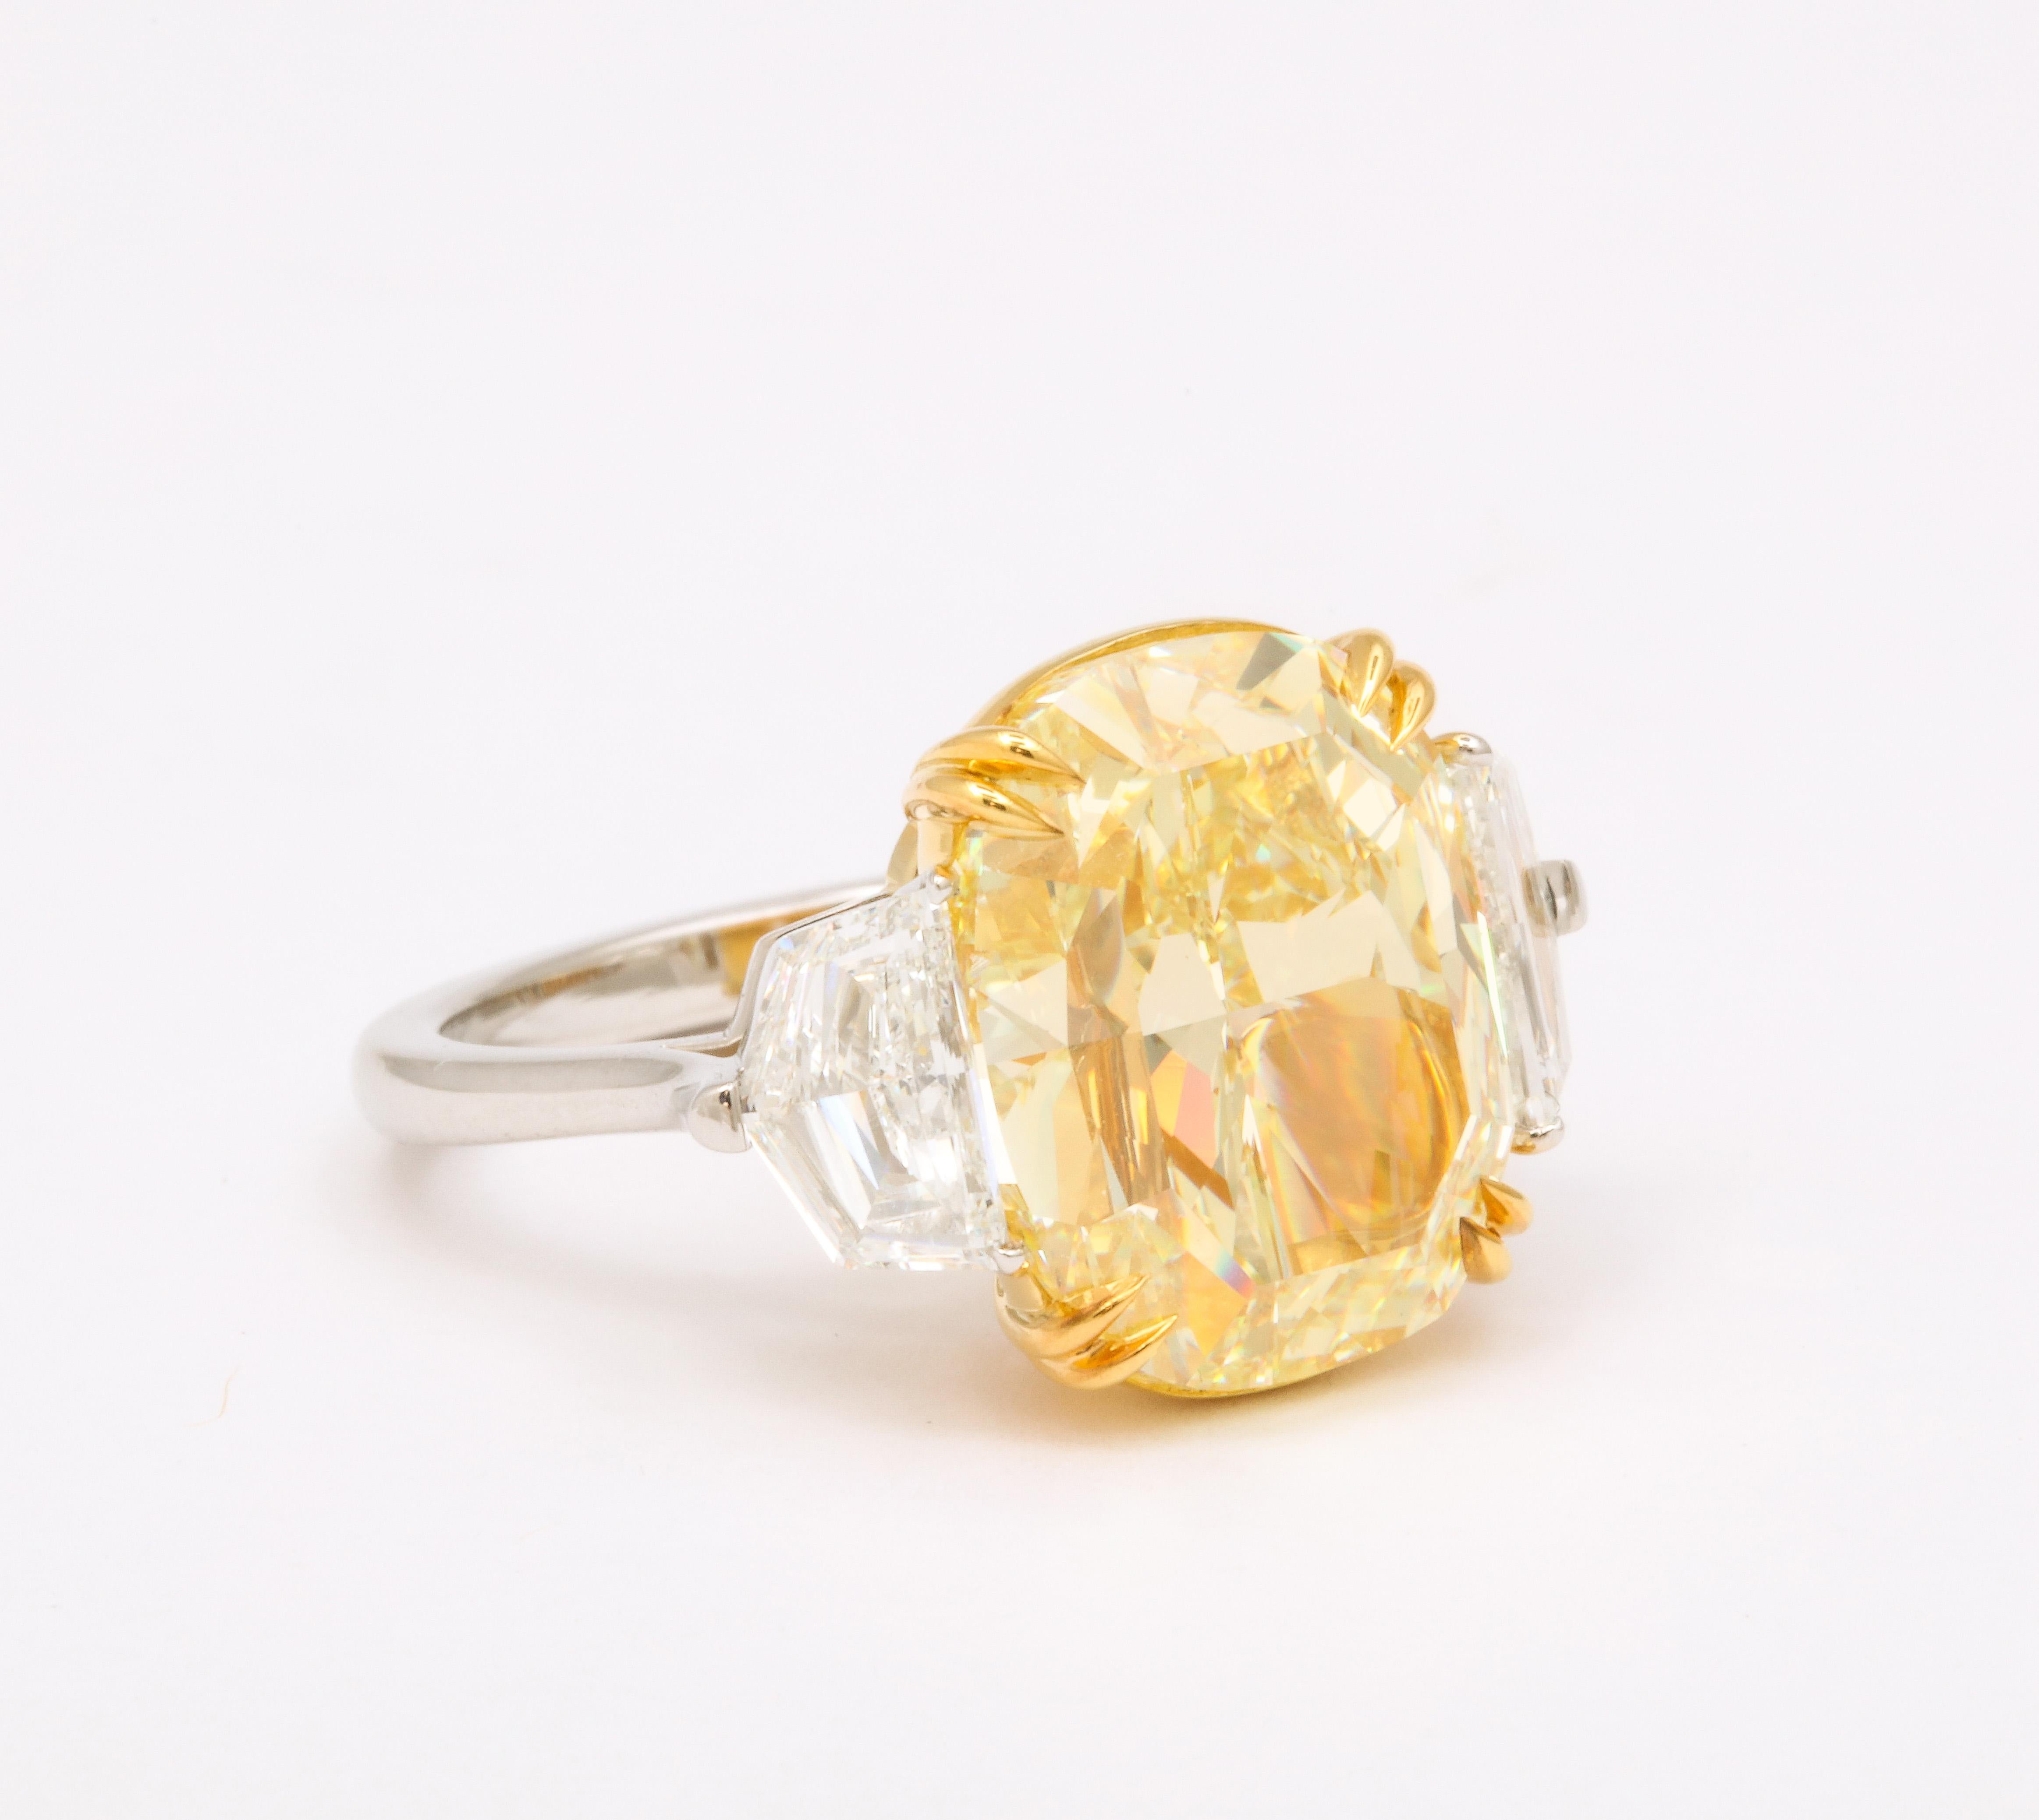 10 carat canary diamond ring